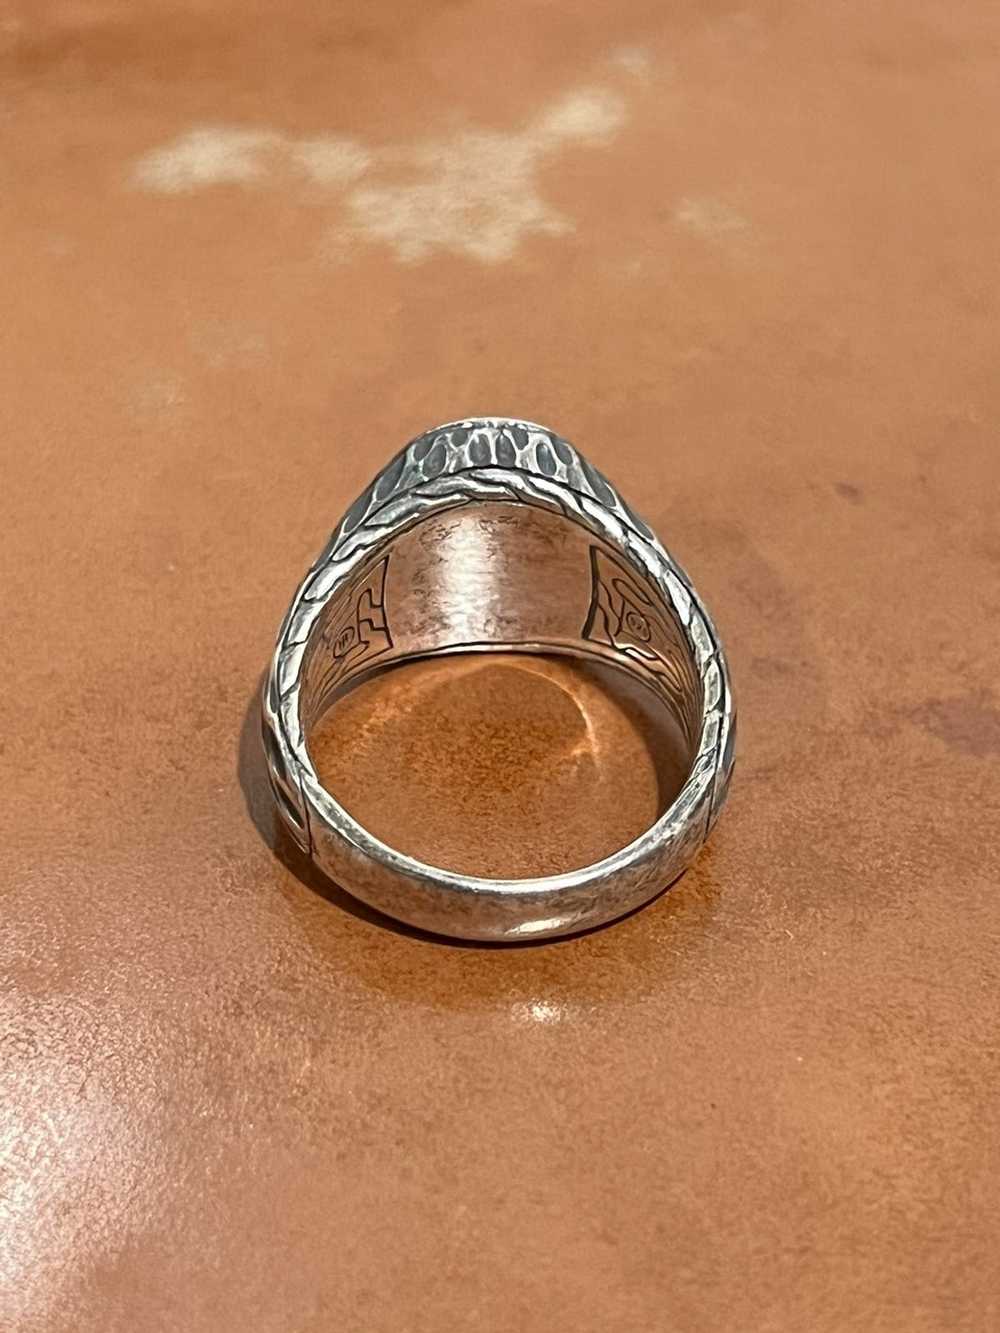 Designer John Hardy Legend Naga Ring - image 4